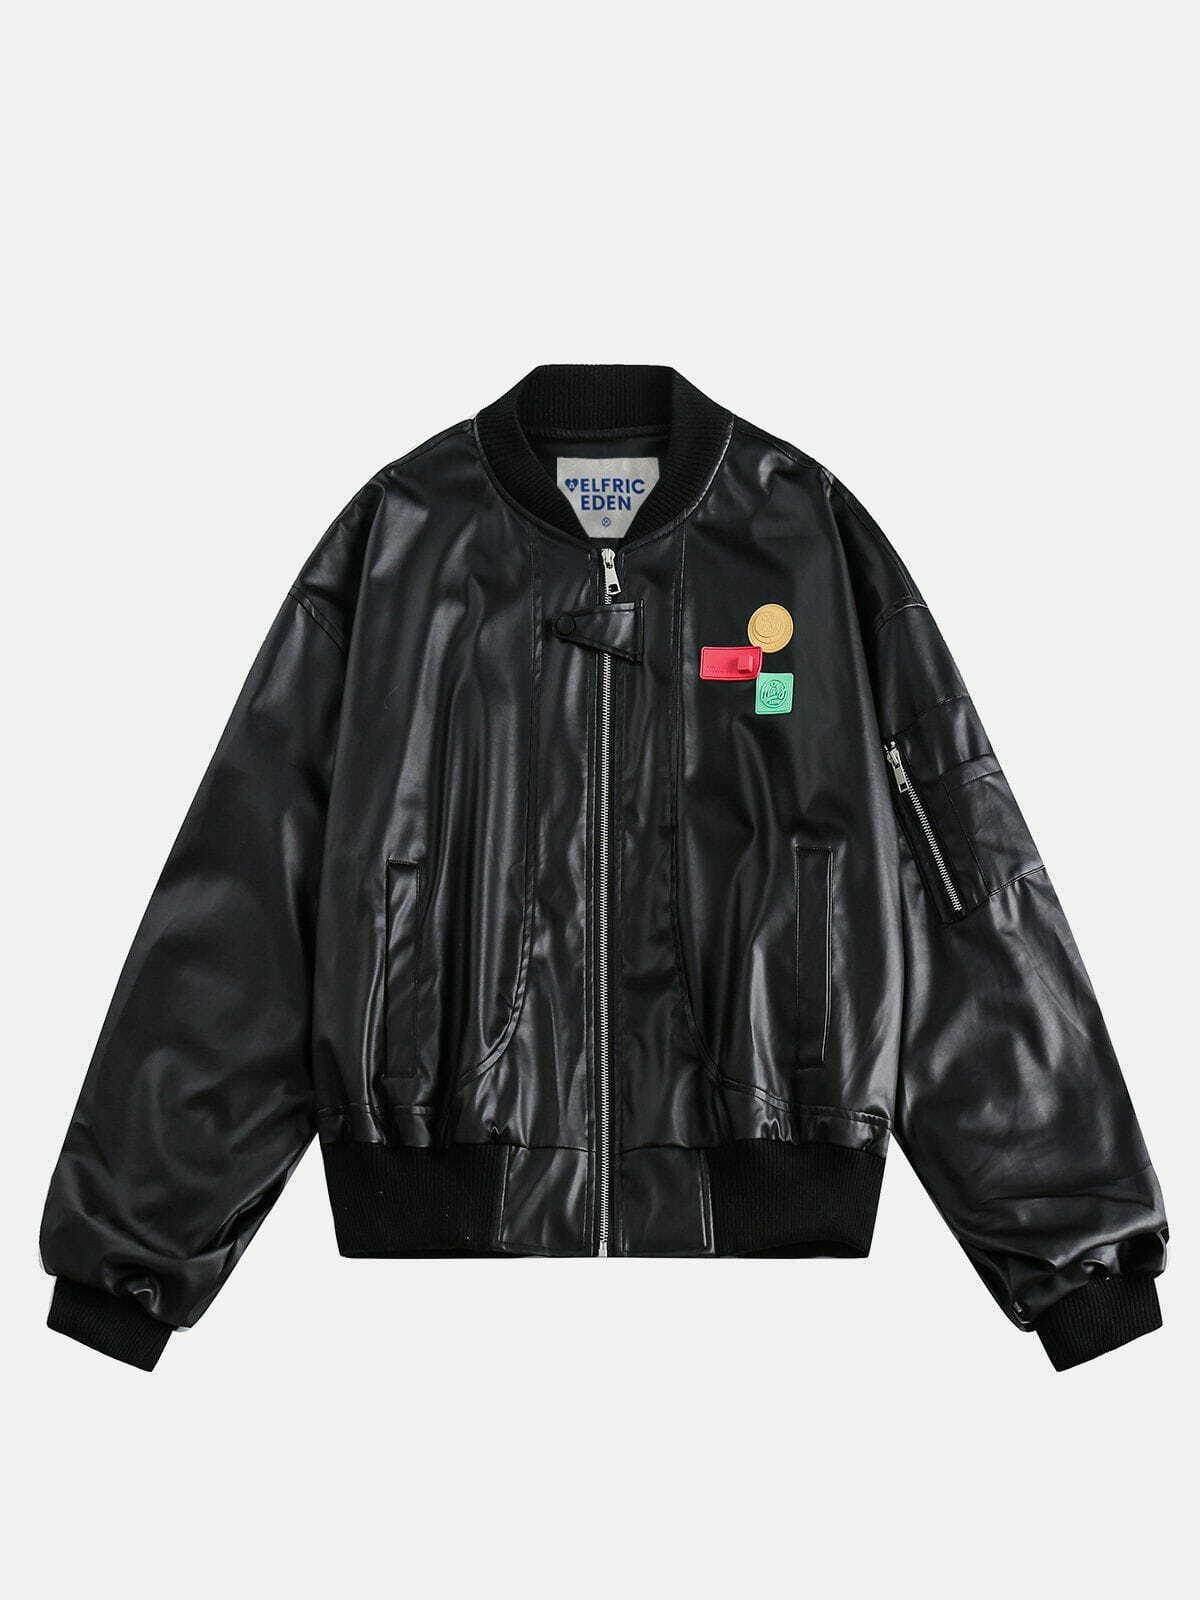 youthful badge bomber jacket   urban & trendy appeal 3066